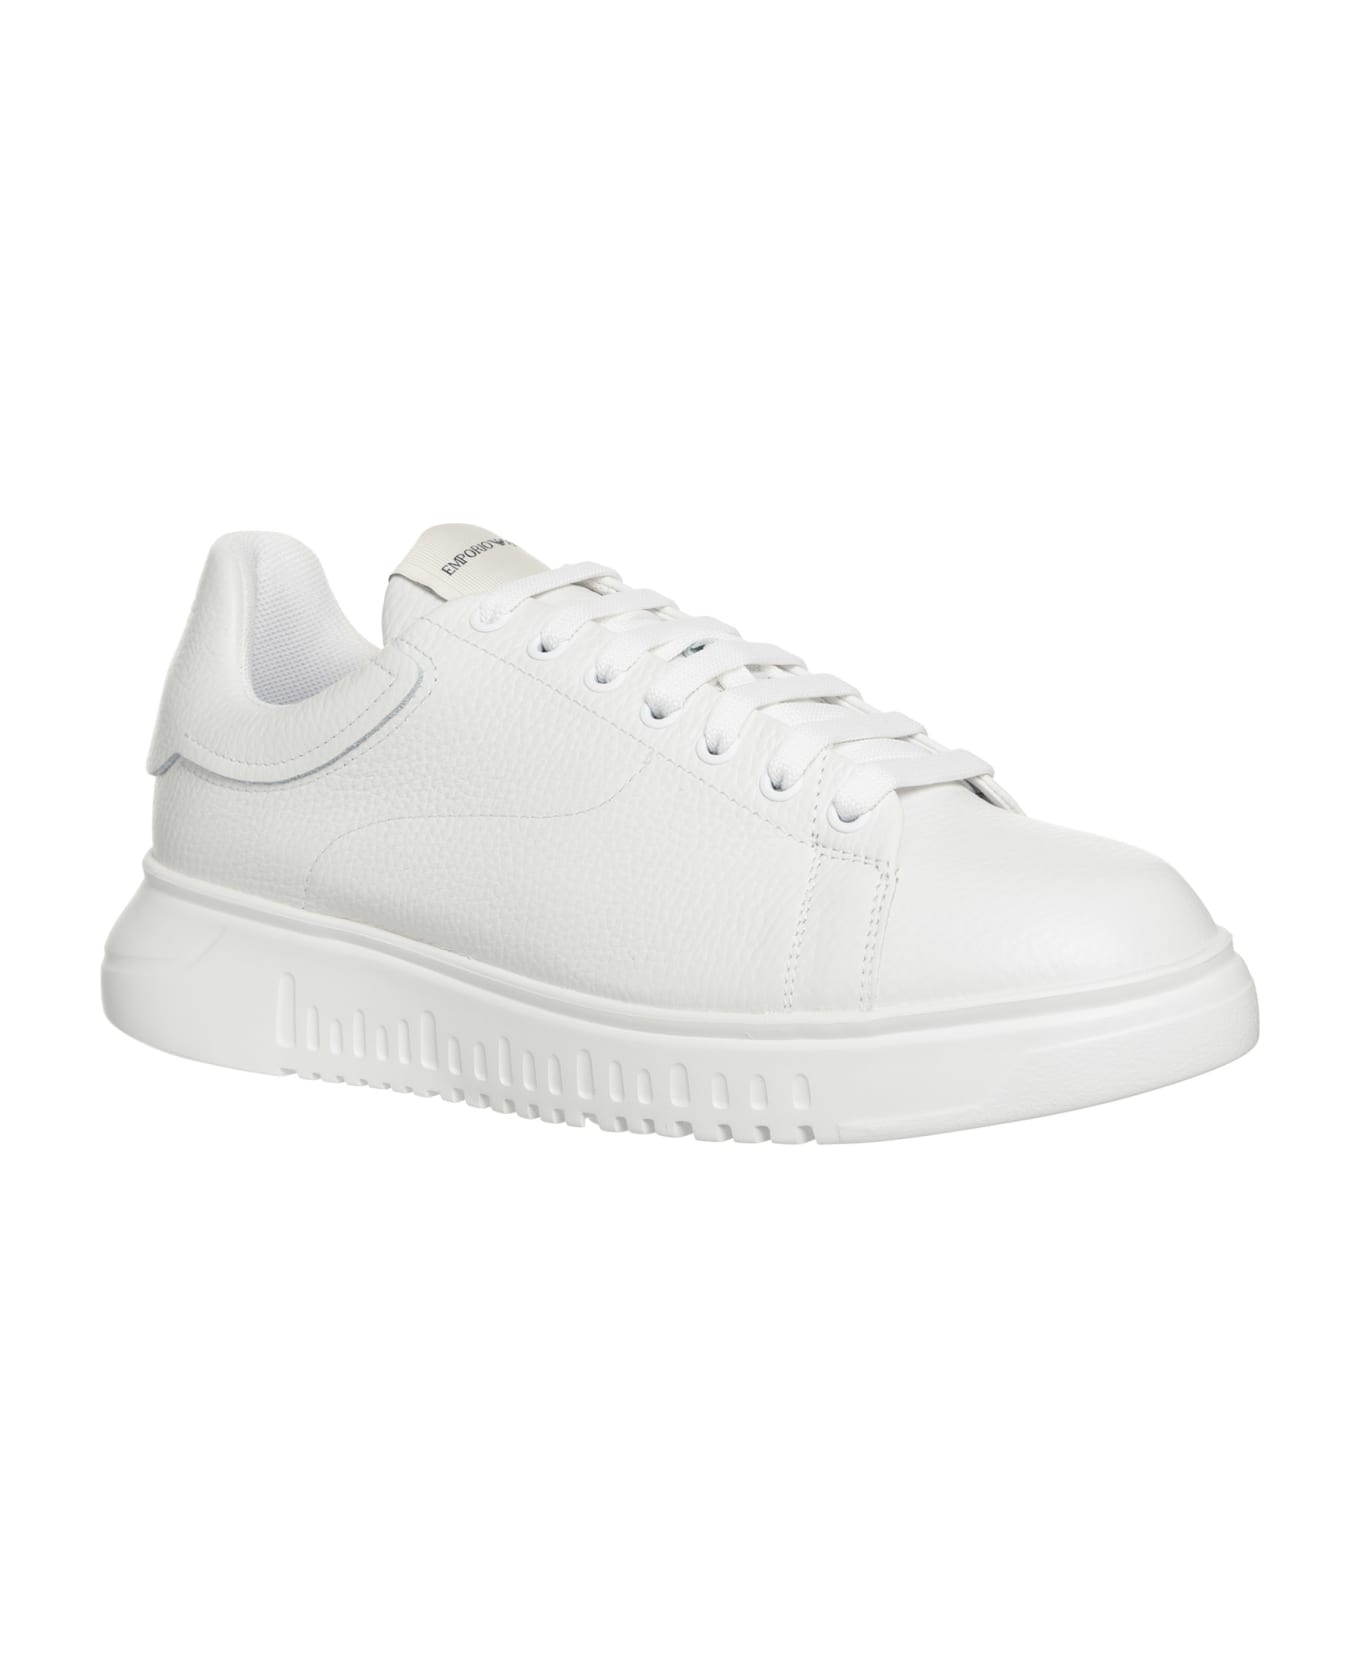 Emporio Armani Leather Sneakers - White スニーカー